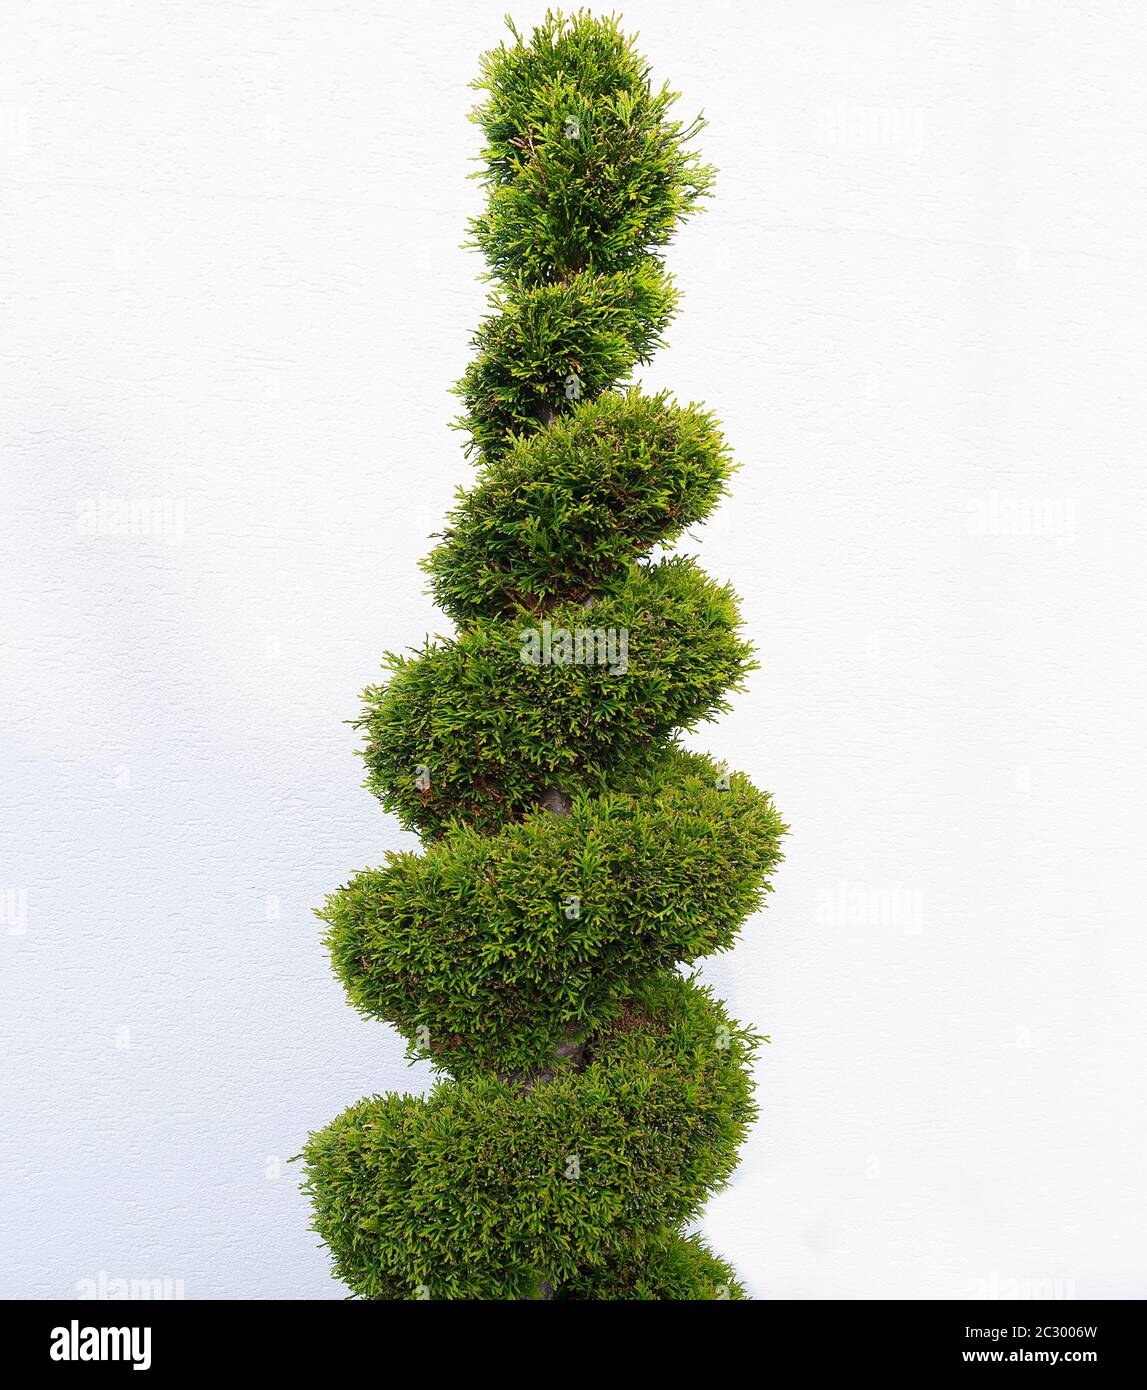 Twisted Topiary Tree, topiary cut, Arborvitae (Thuja), Germany Stock Photo